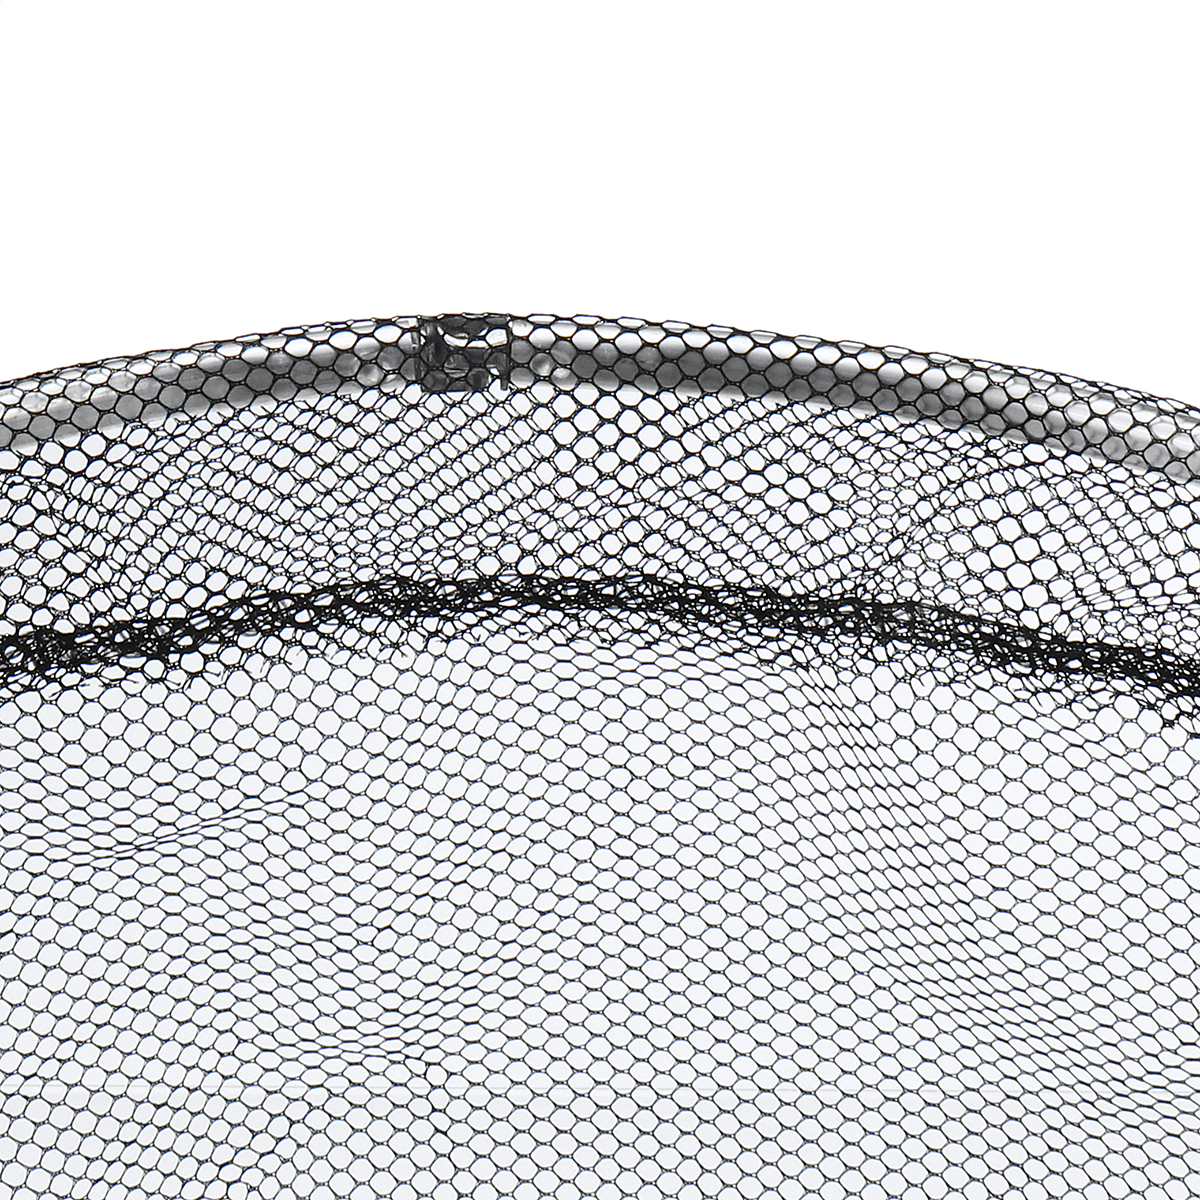 Head-Fishing-Nets-Brail-Nano-Titanium-Alloy-Landing-Net-Removable-Hand-Net-1681838-10